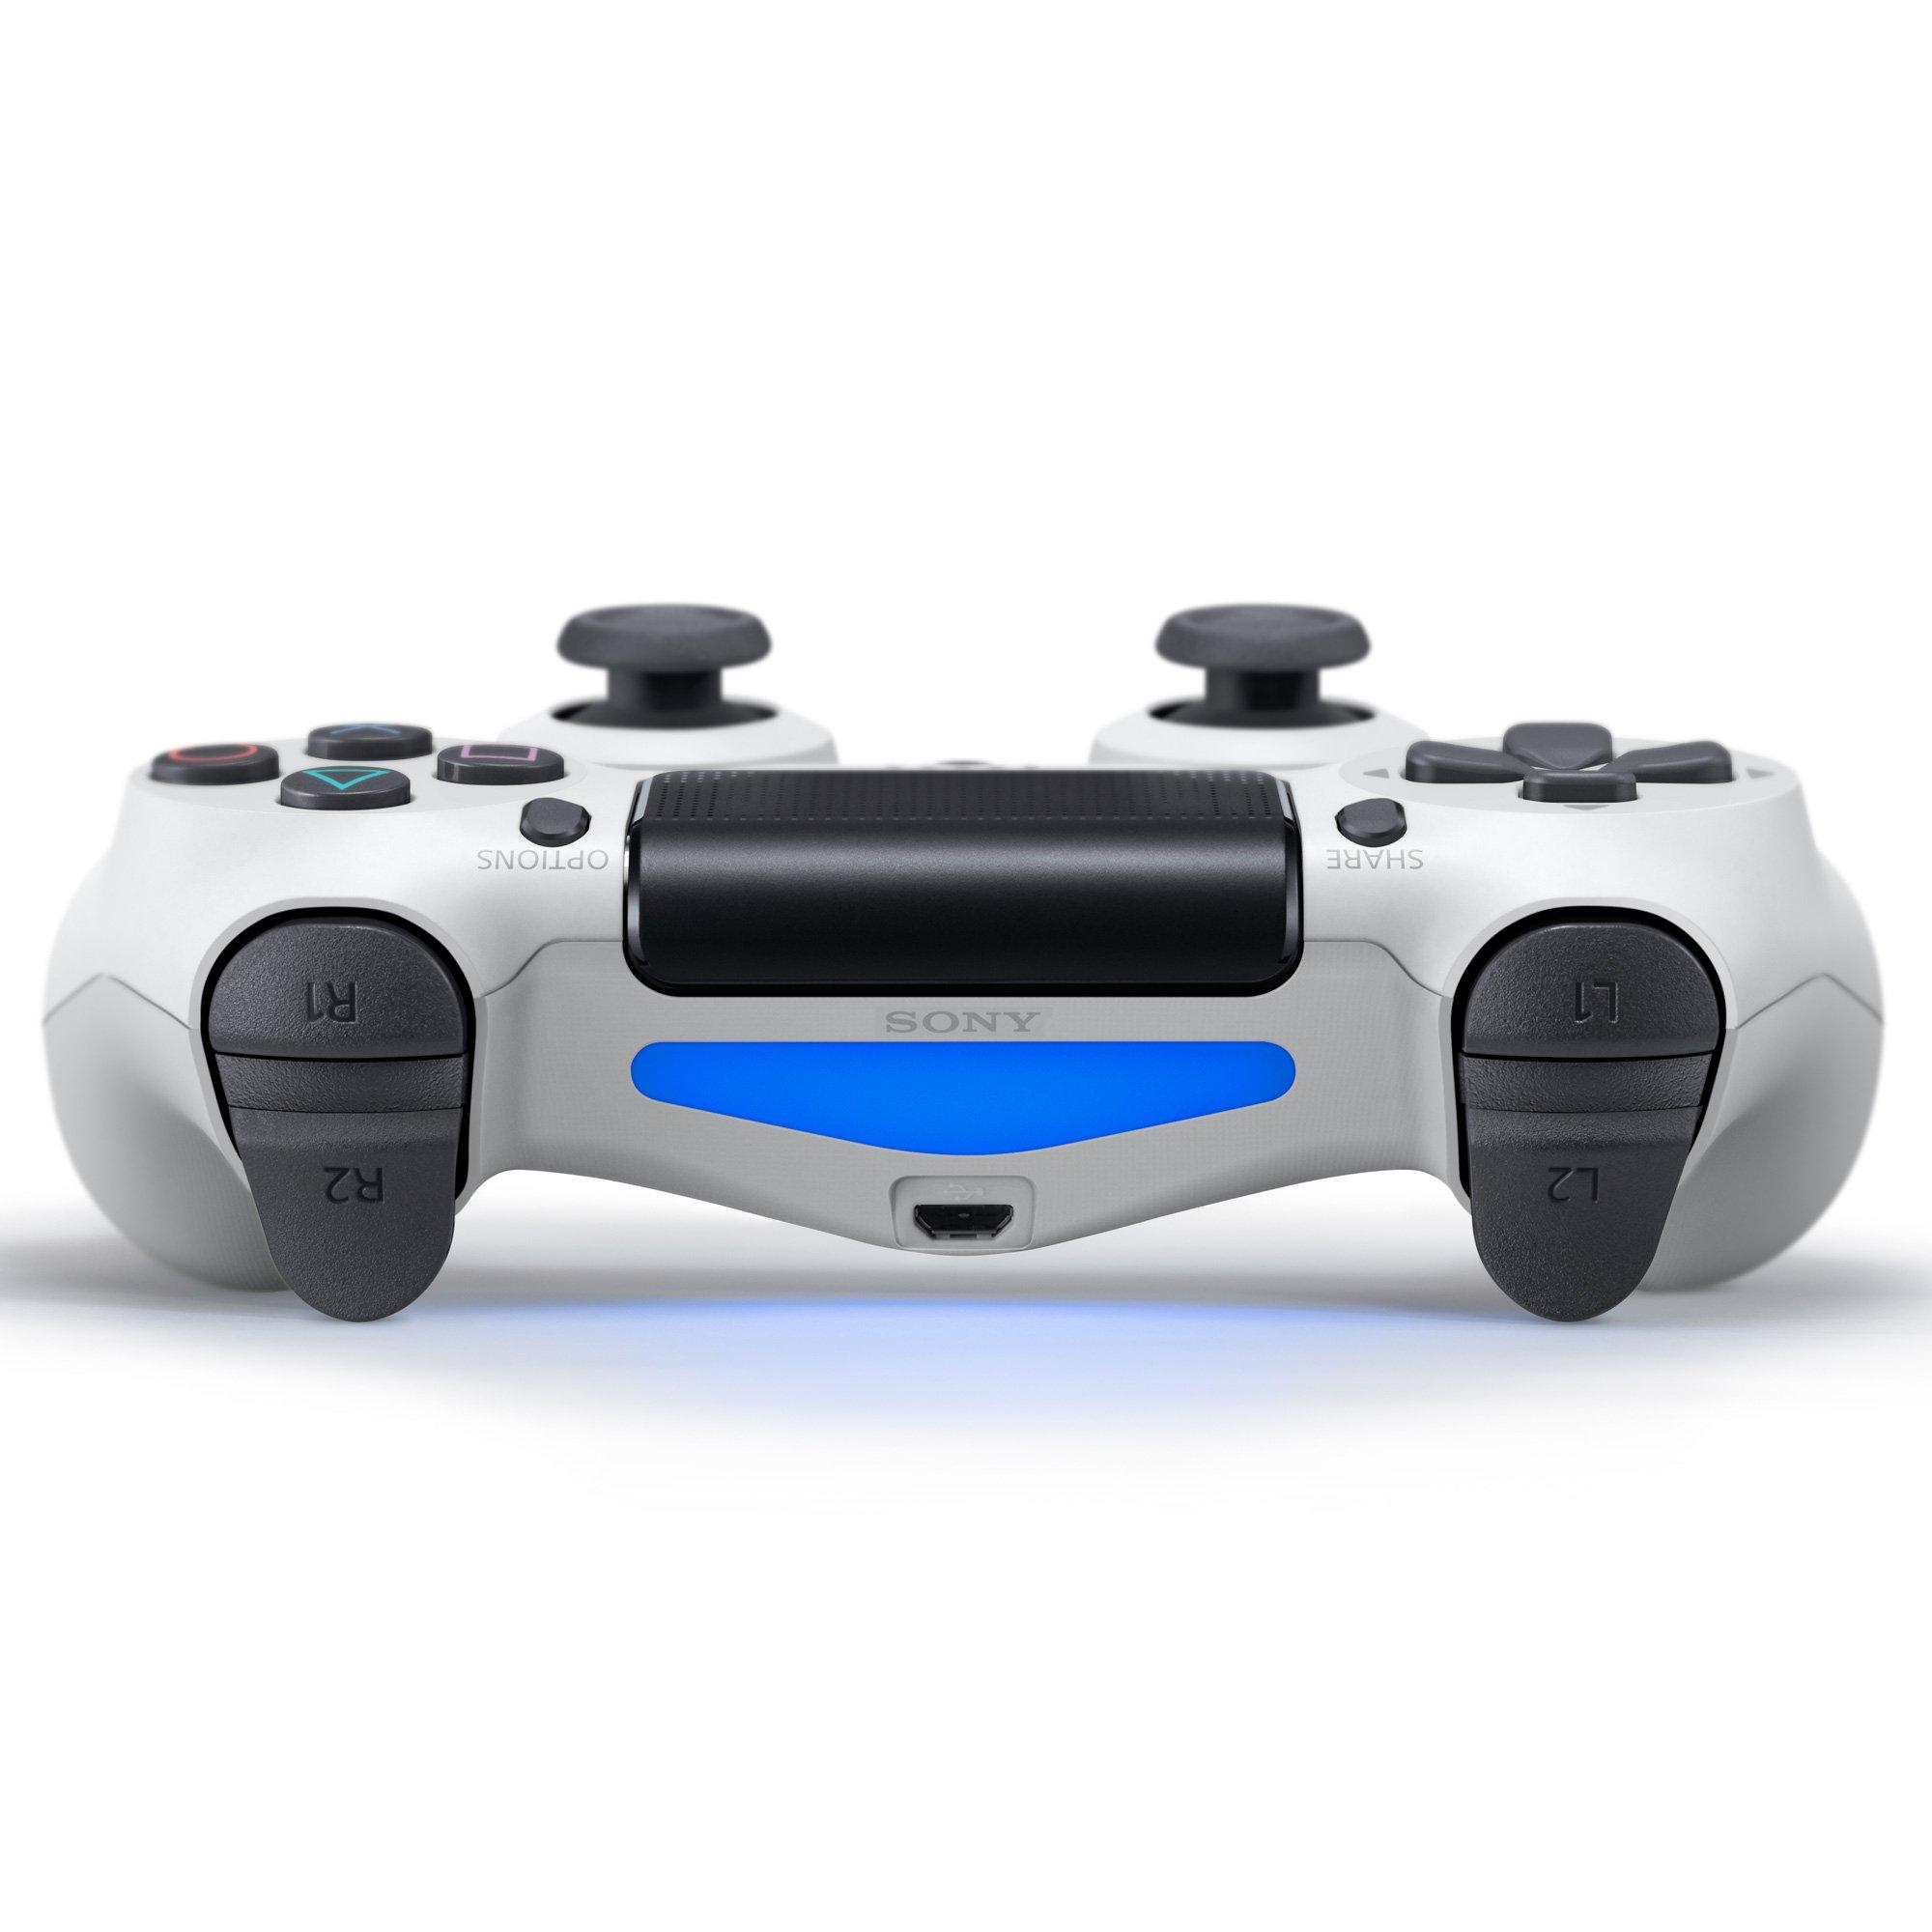 SONY DualShock 4 (PS4) Wireless Controller 